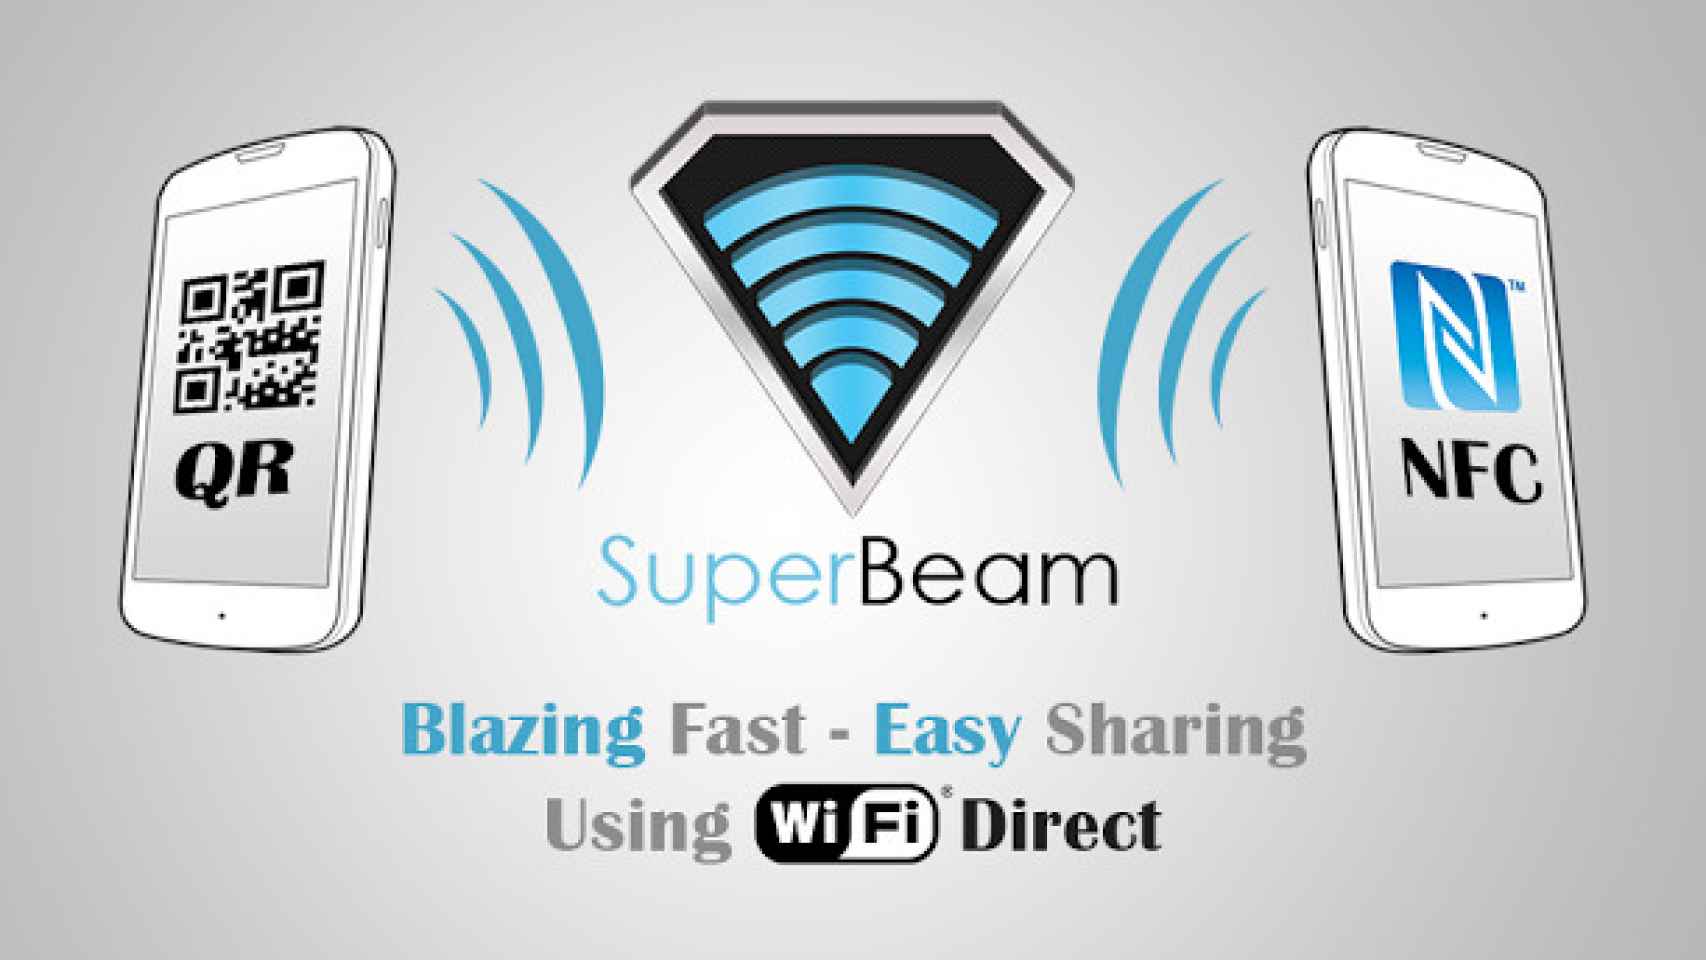 SuperBeam, transfiere varios archivos a la vez entre Androids con WiFi Direct